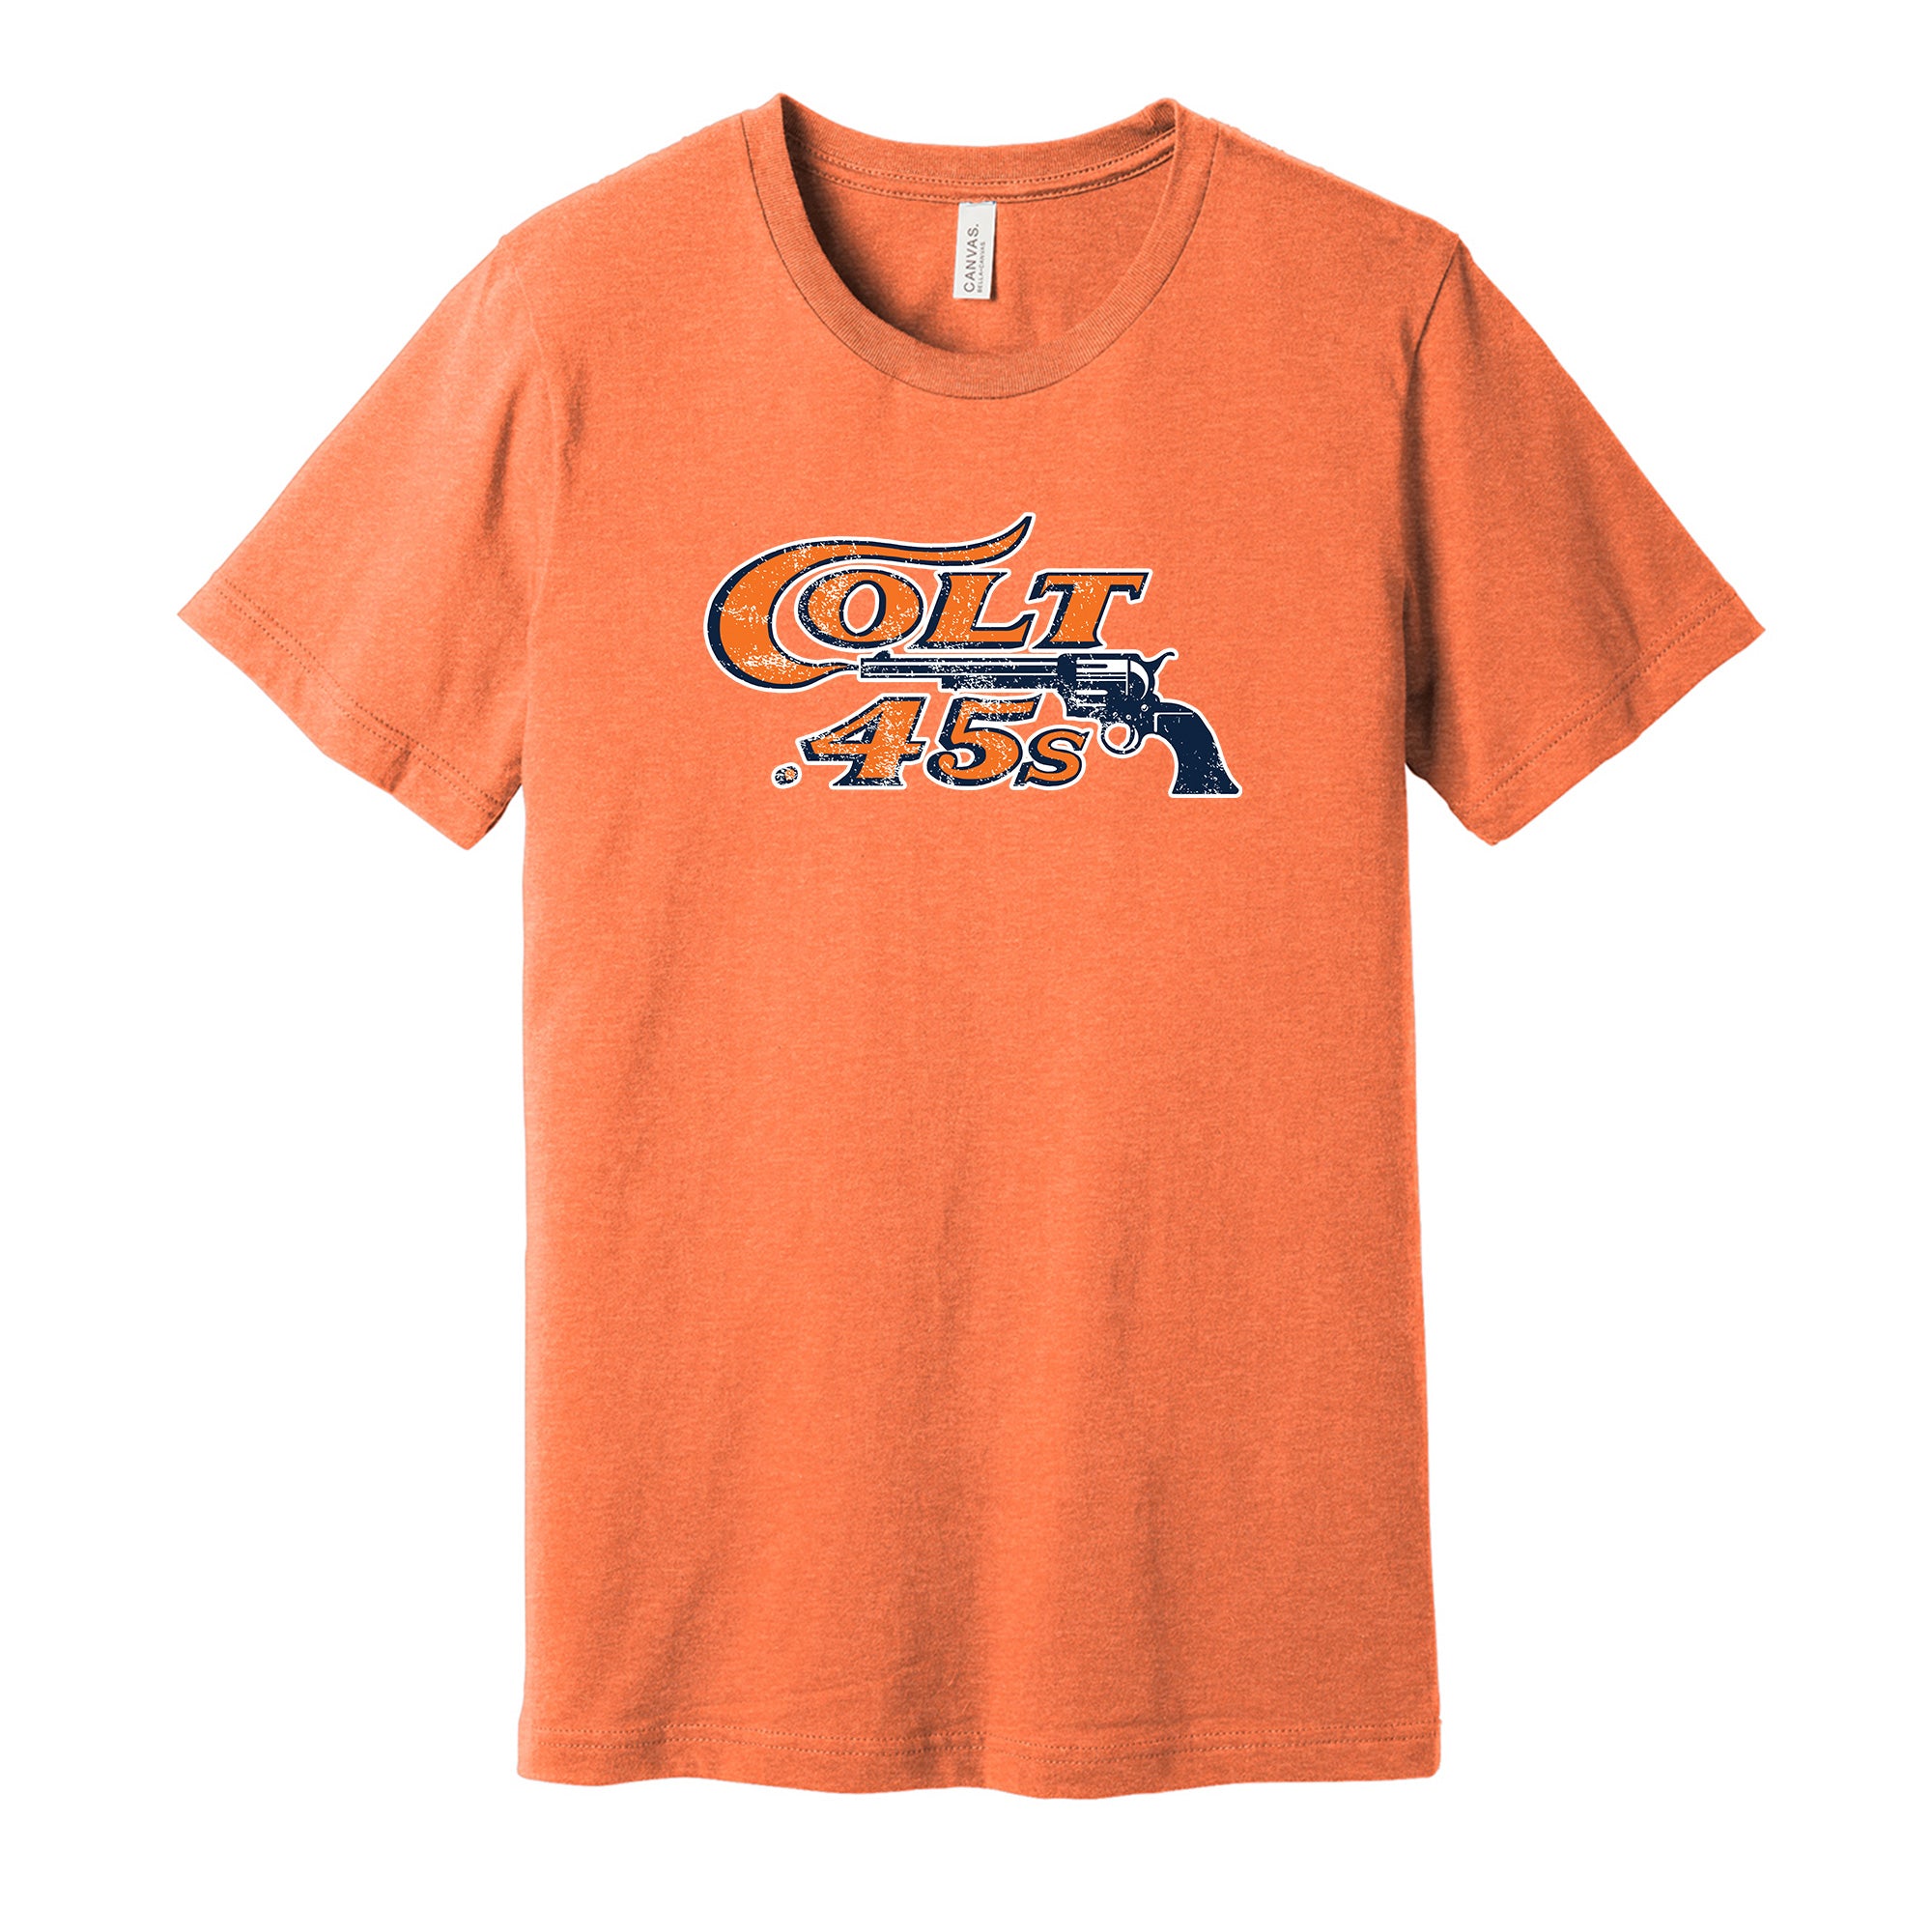 Hyper Than Hype Shirts Houston Colt 45s Distressed Logo Shirt - Defunct Sports Team - Celebrate Texas Heritage and History - Hyper Than Hype XXL / Orange Shirt